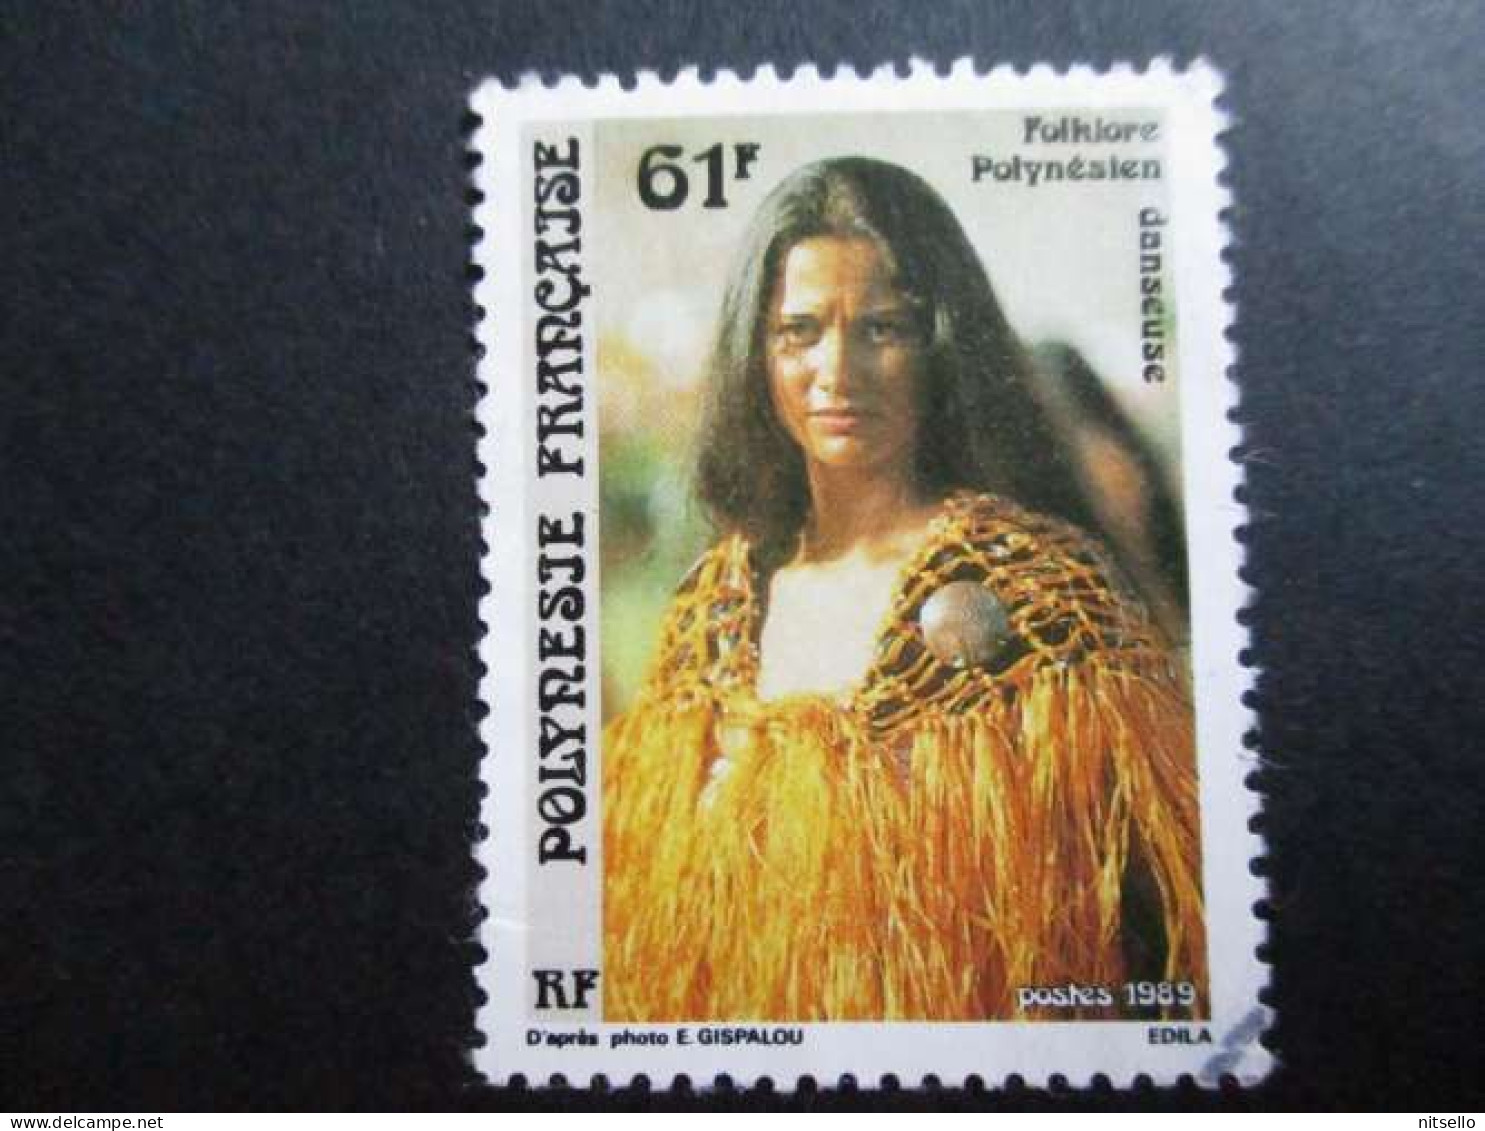 LOTE 2202A ///  (C025)  POLINESIA FRANCESA  - YVERT Nº: 334 OBL 1989     ¡¡¡ OFERTA - LIQUIDATION - JE LIQUIDE !!! - Used Stamps